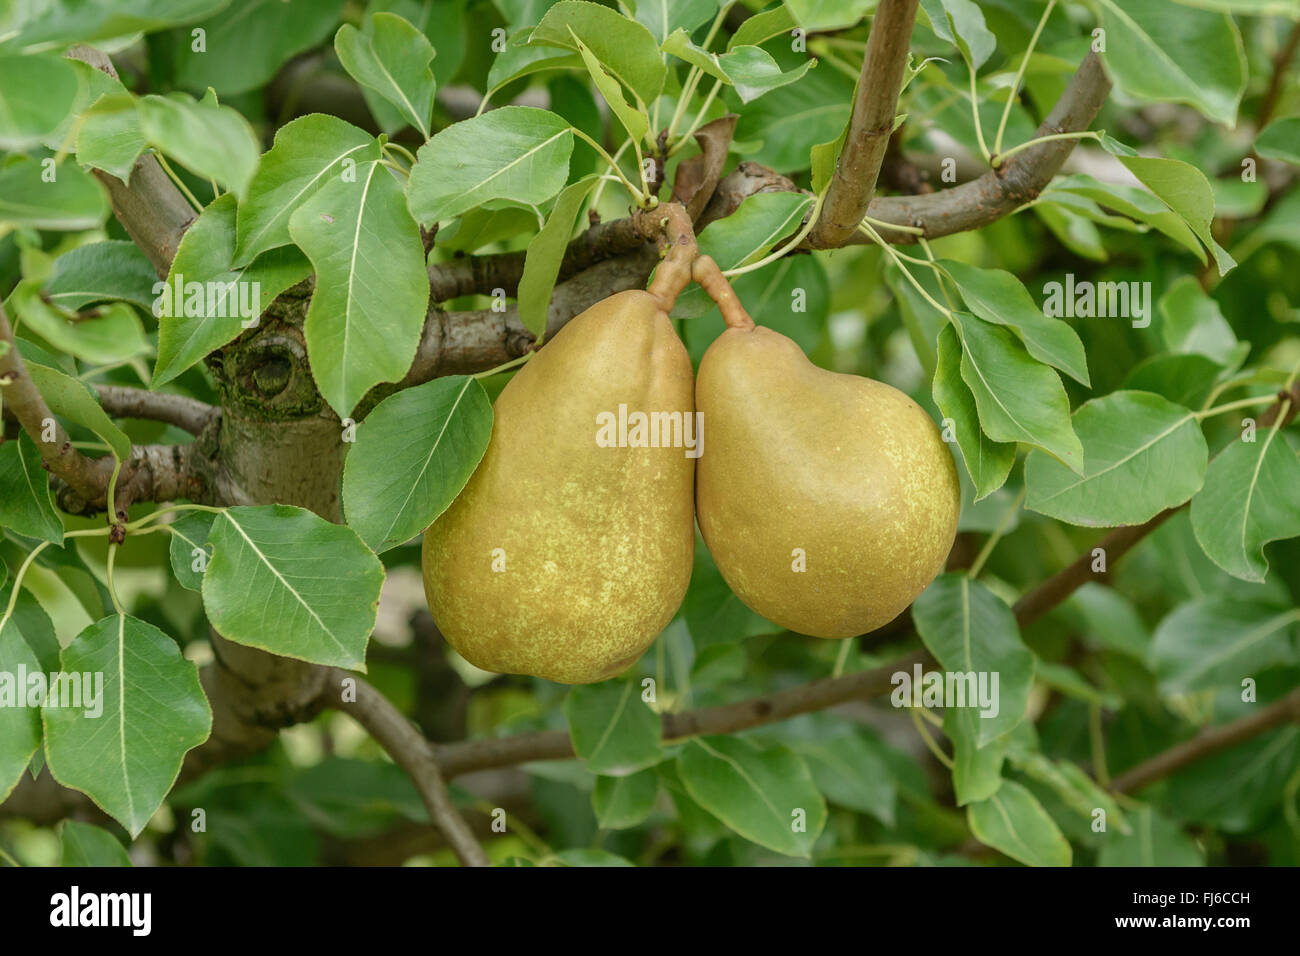 Common pear (Pyrus communis 'Champirac', Pyrus communis Champirac), pears on a tree, cultivar Champirac, Germany Stock Photo